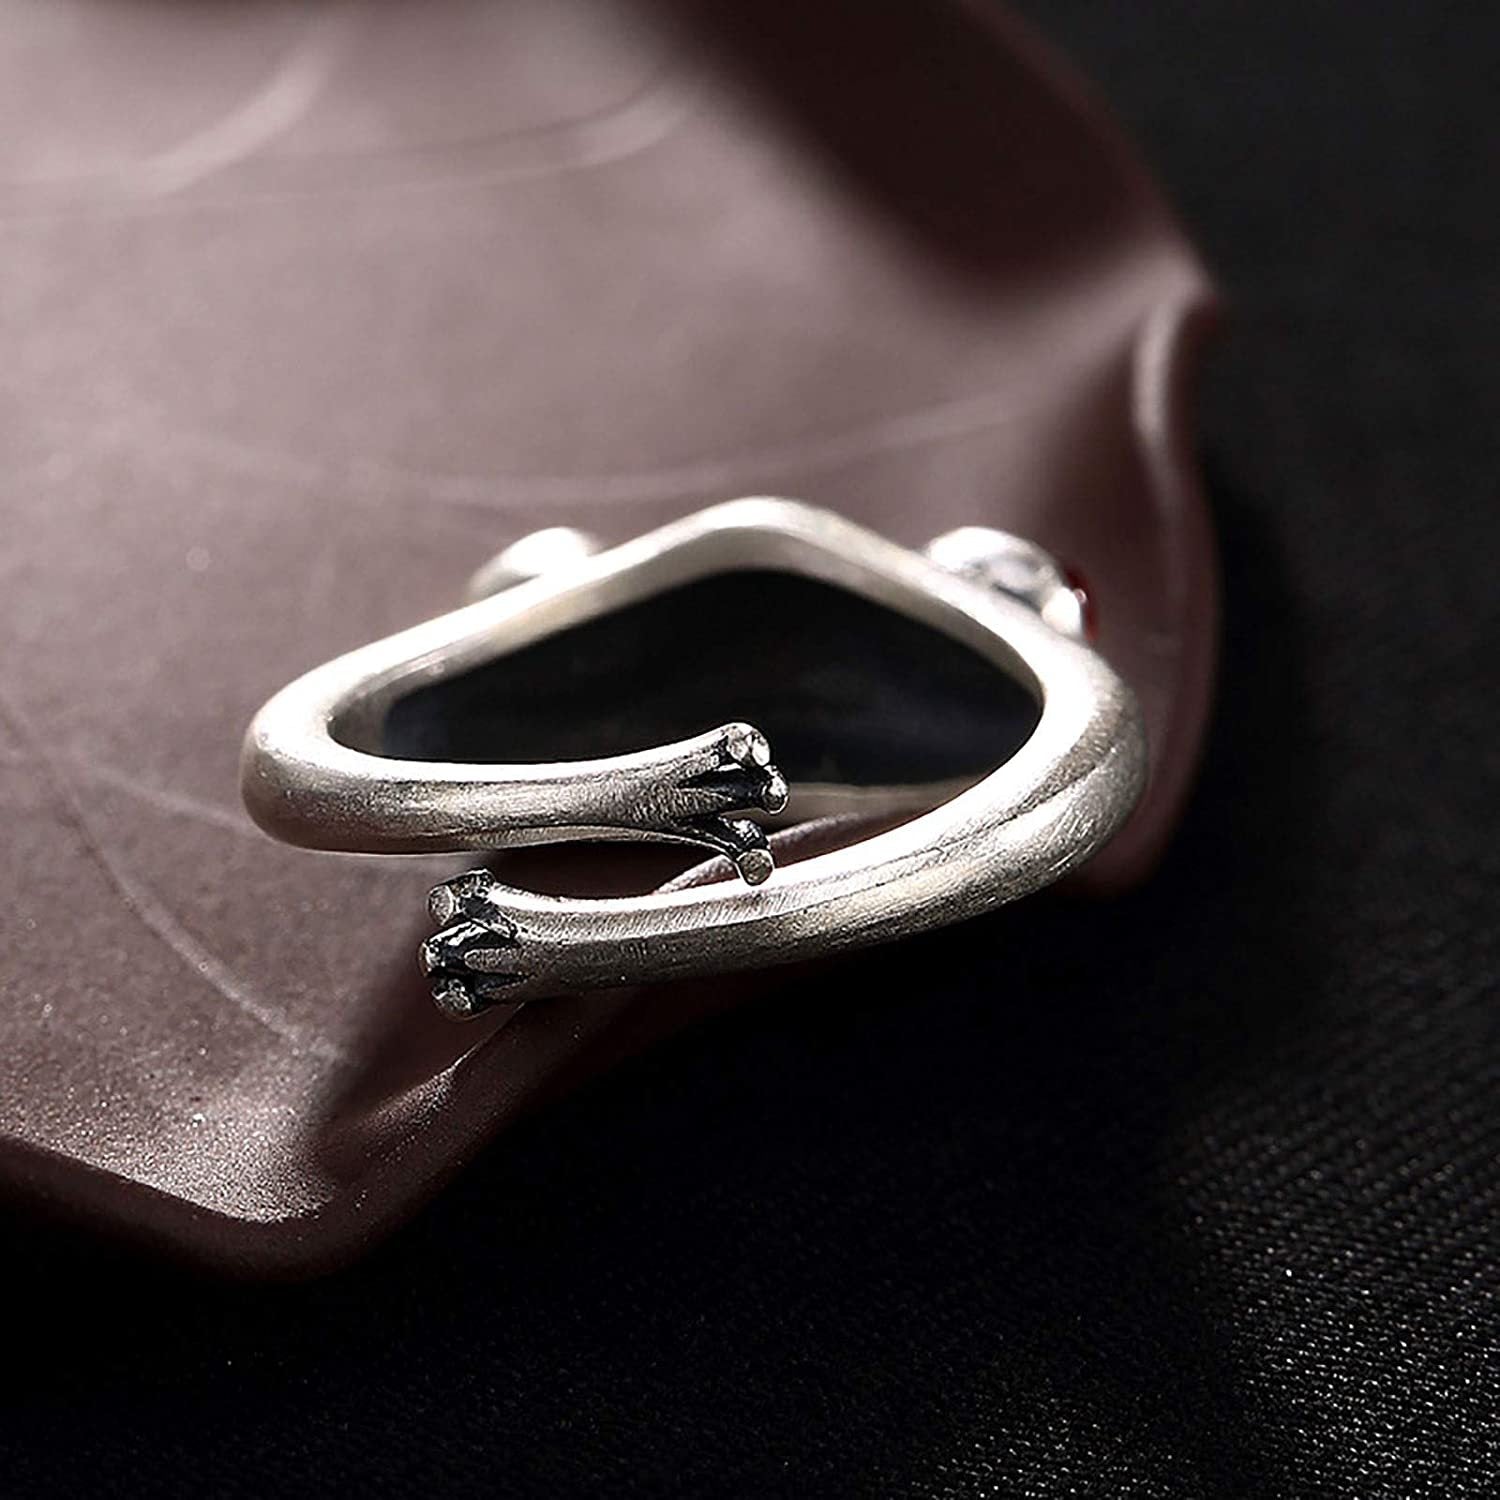 Kexle Real Sterling Silver Frog Open Rings for Women, Adjustable Vintage Finger Ring